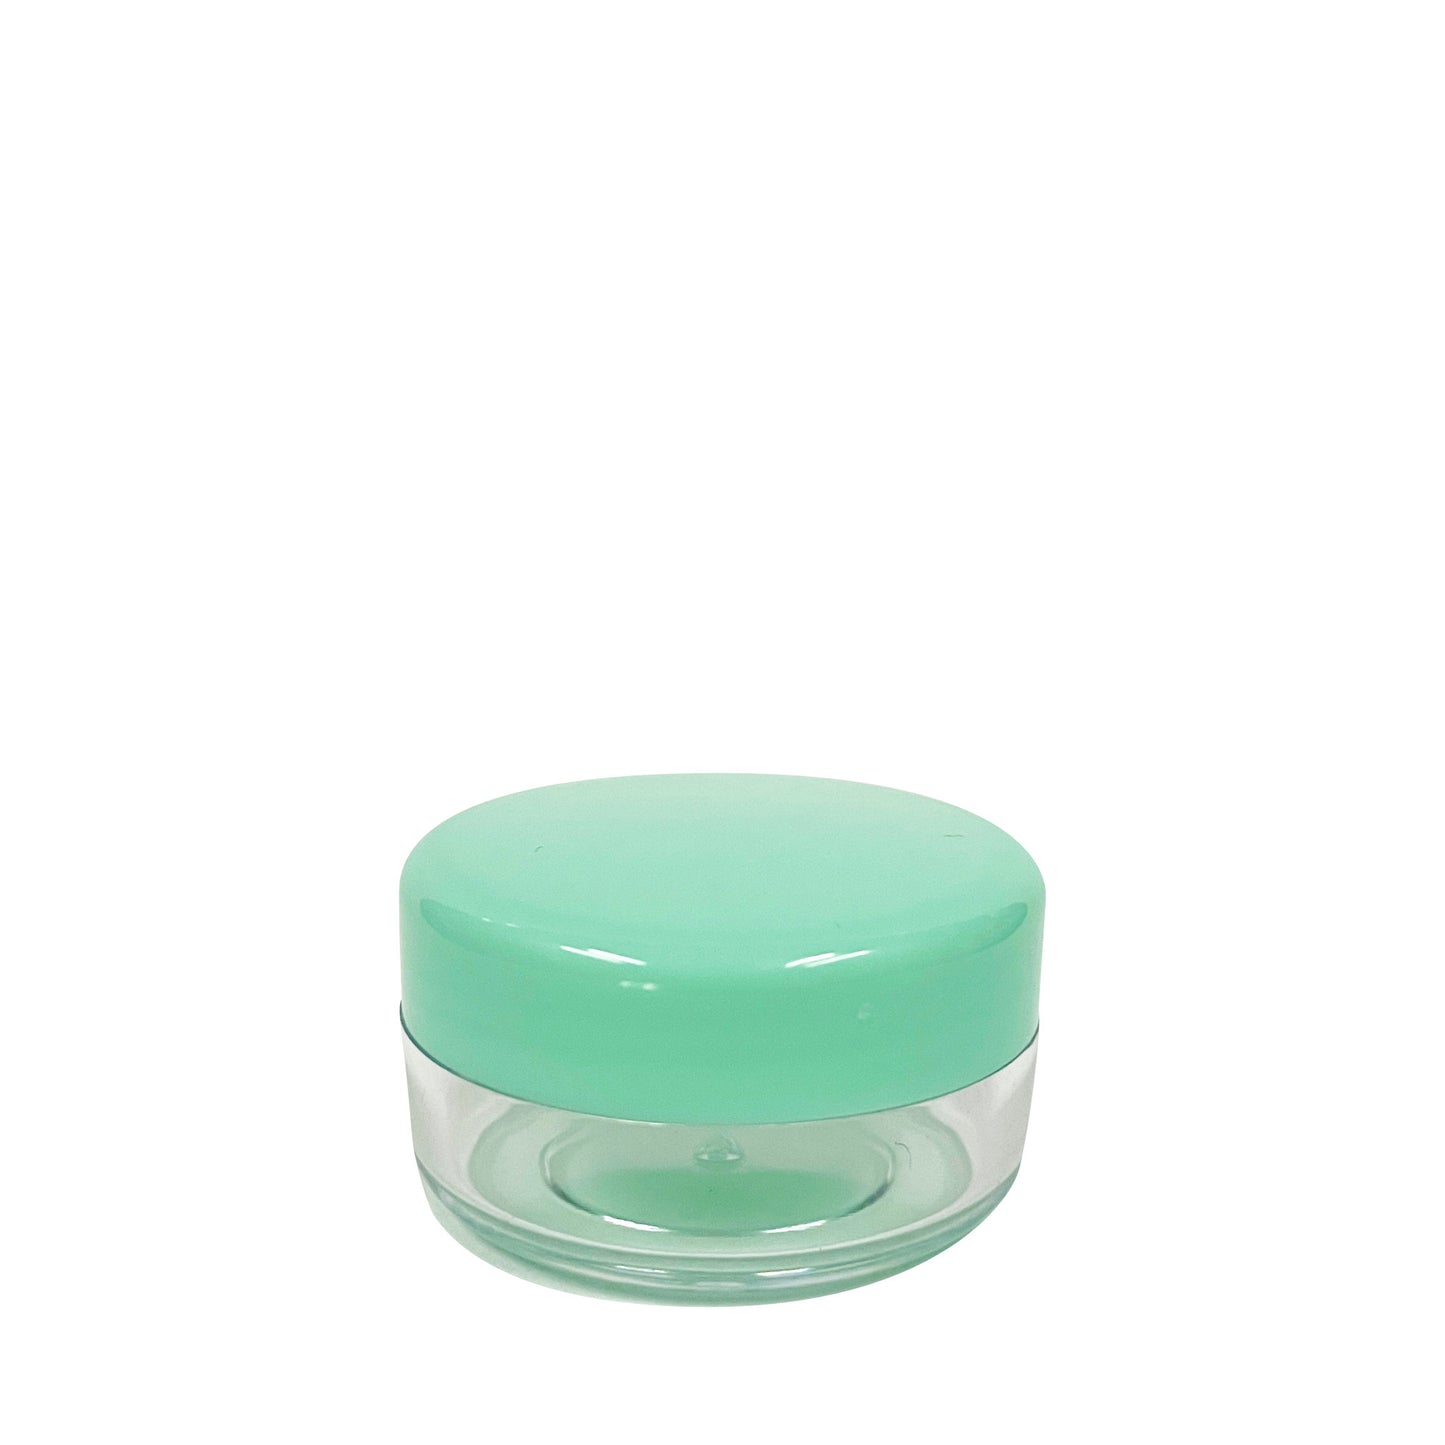 10 g Clear Acrylic Jar with Green Lid